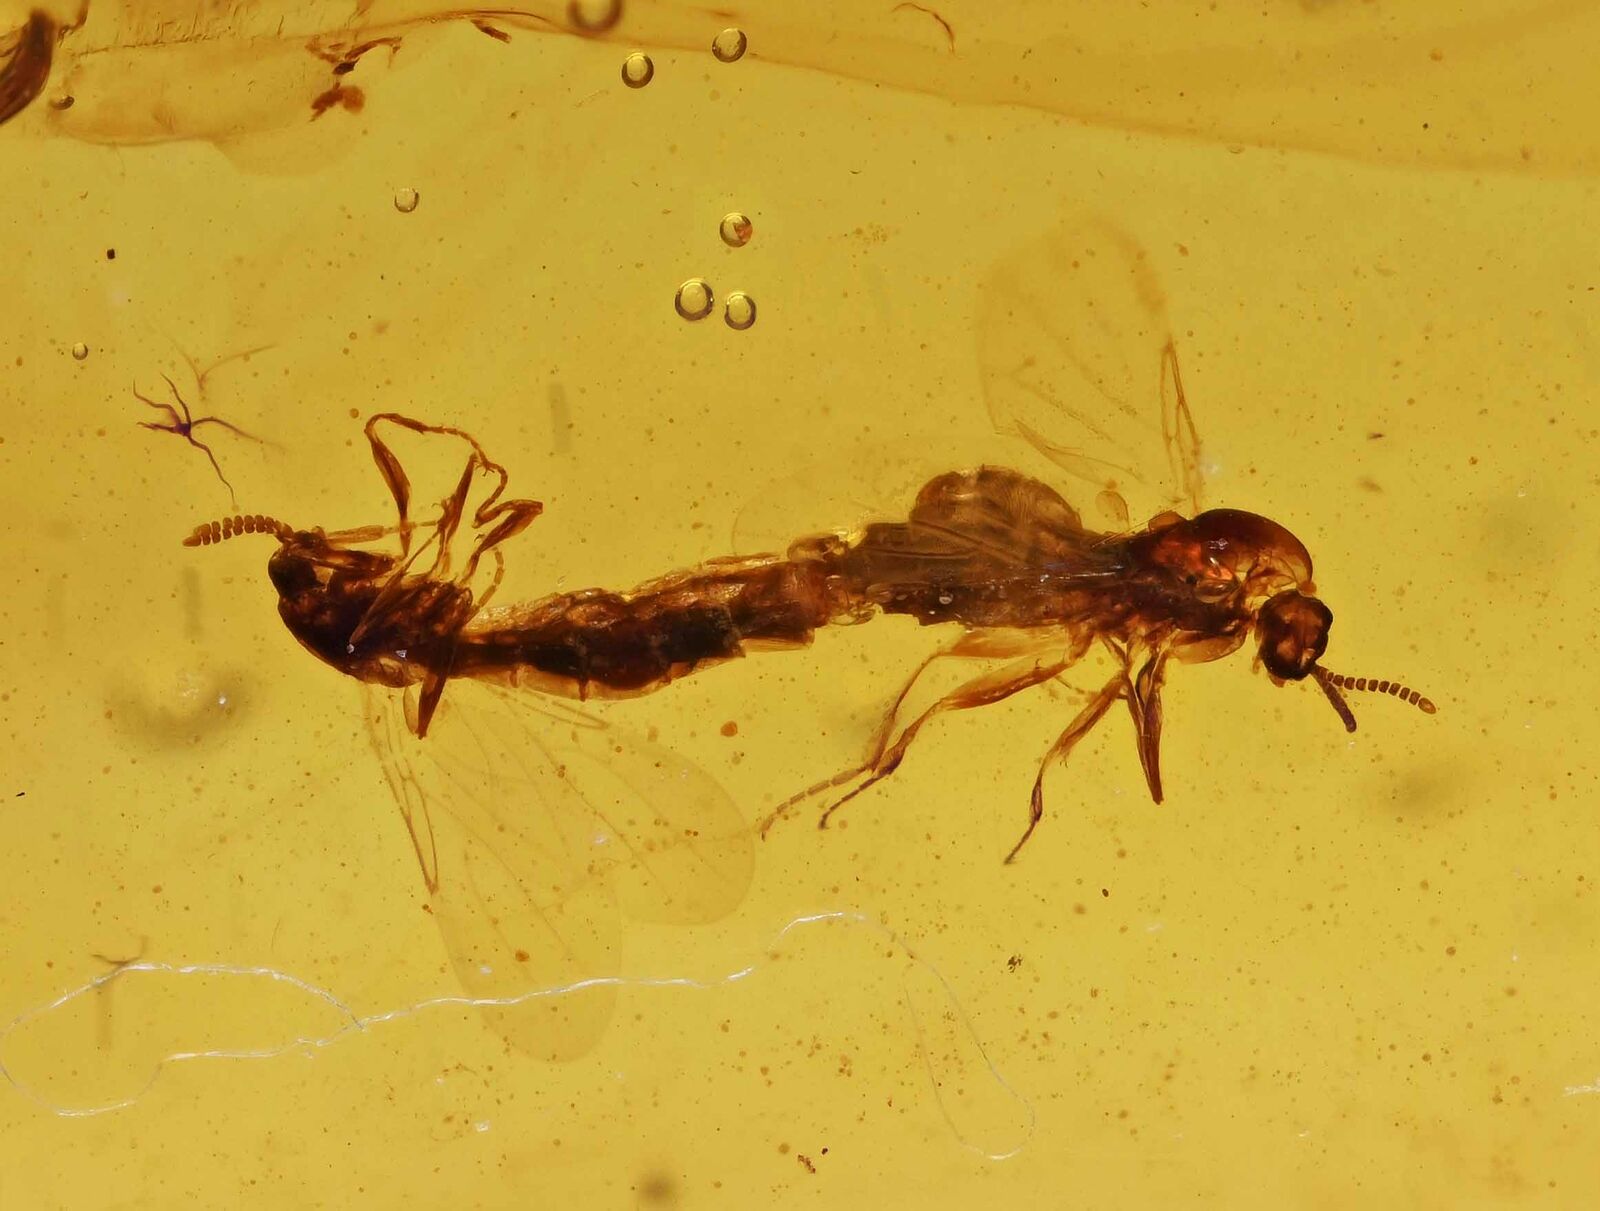 Rare Mating pair of Brachycera (Flies), Fossil inclusion in Burmese Amber